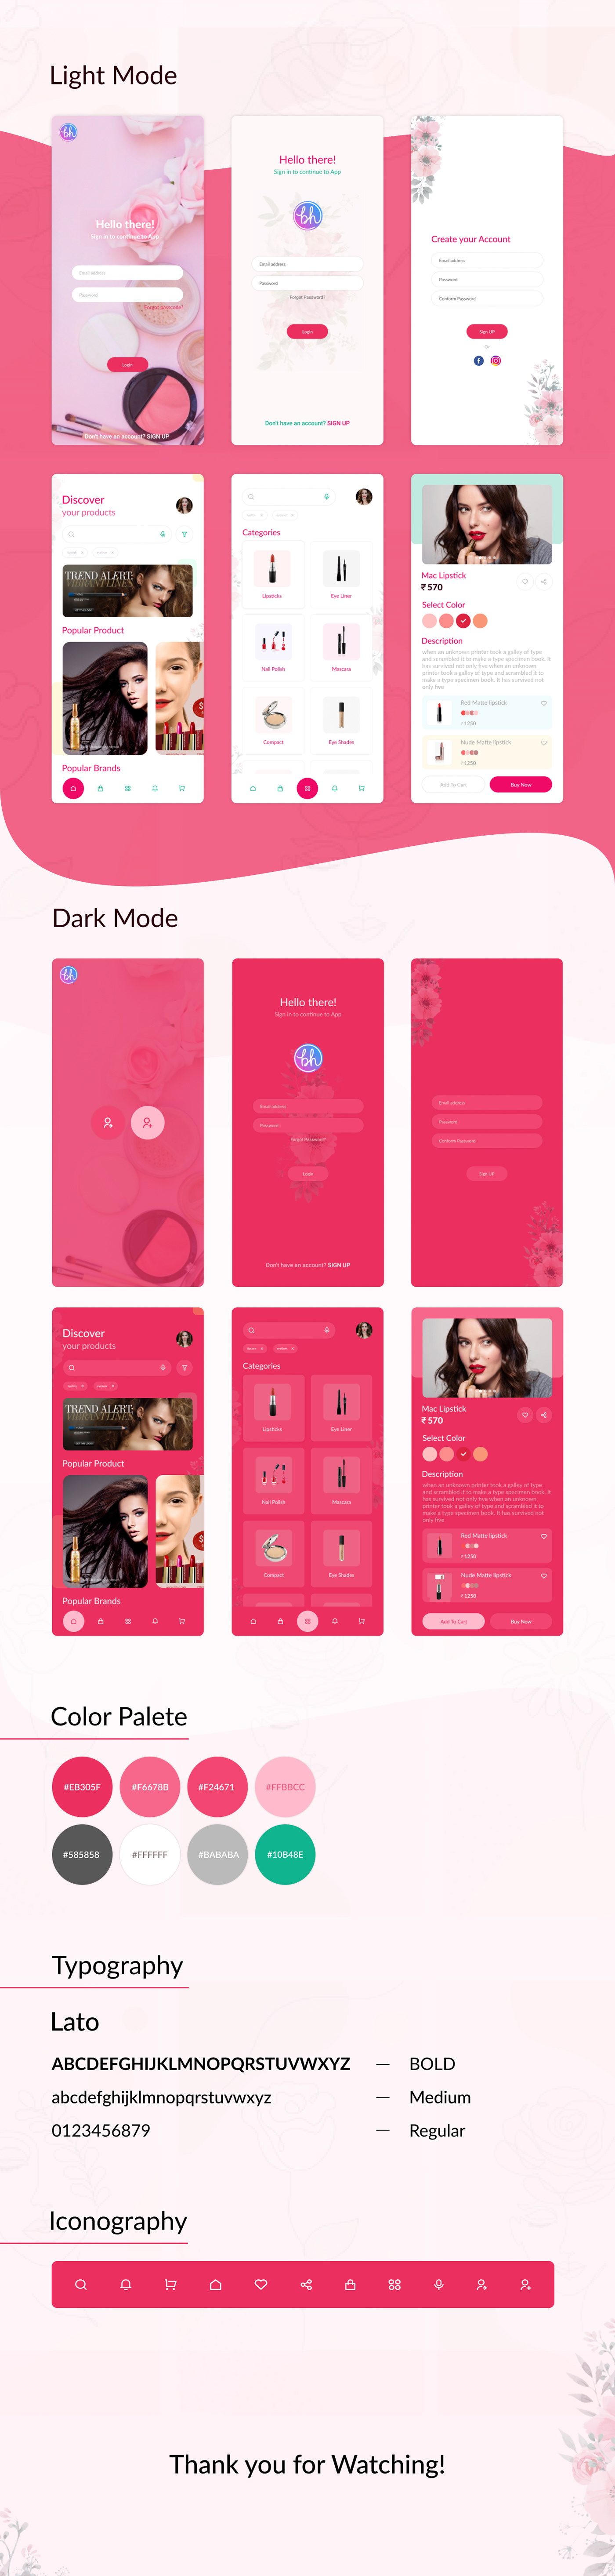 beauty colors cosmetics dark theme eyeliner light theme lipstick Mobile app pink UI/UX